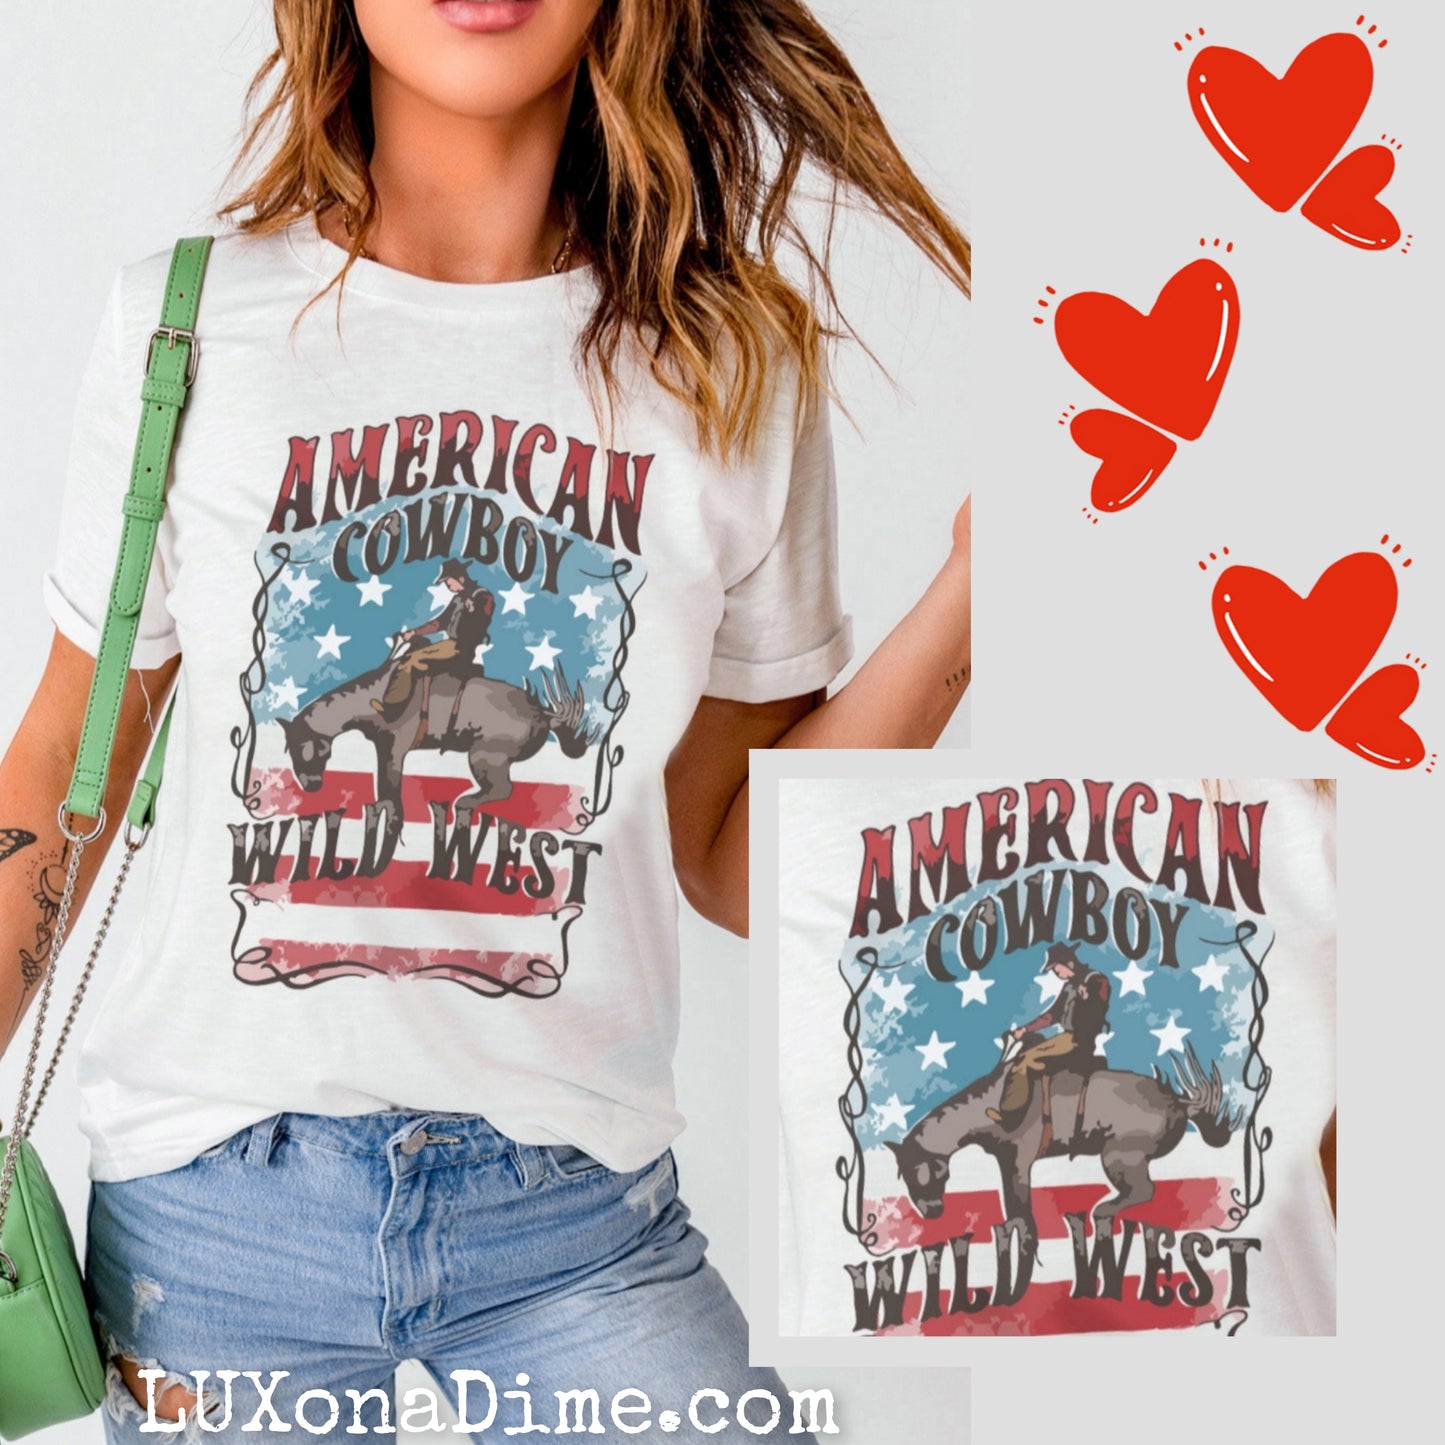 Country Western AMERICAN COWBOY WILD WEST Patriotic Tee Shirt